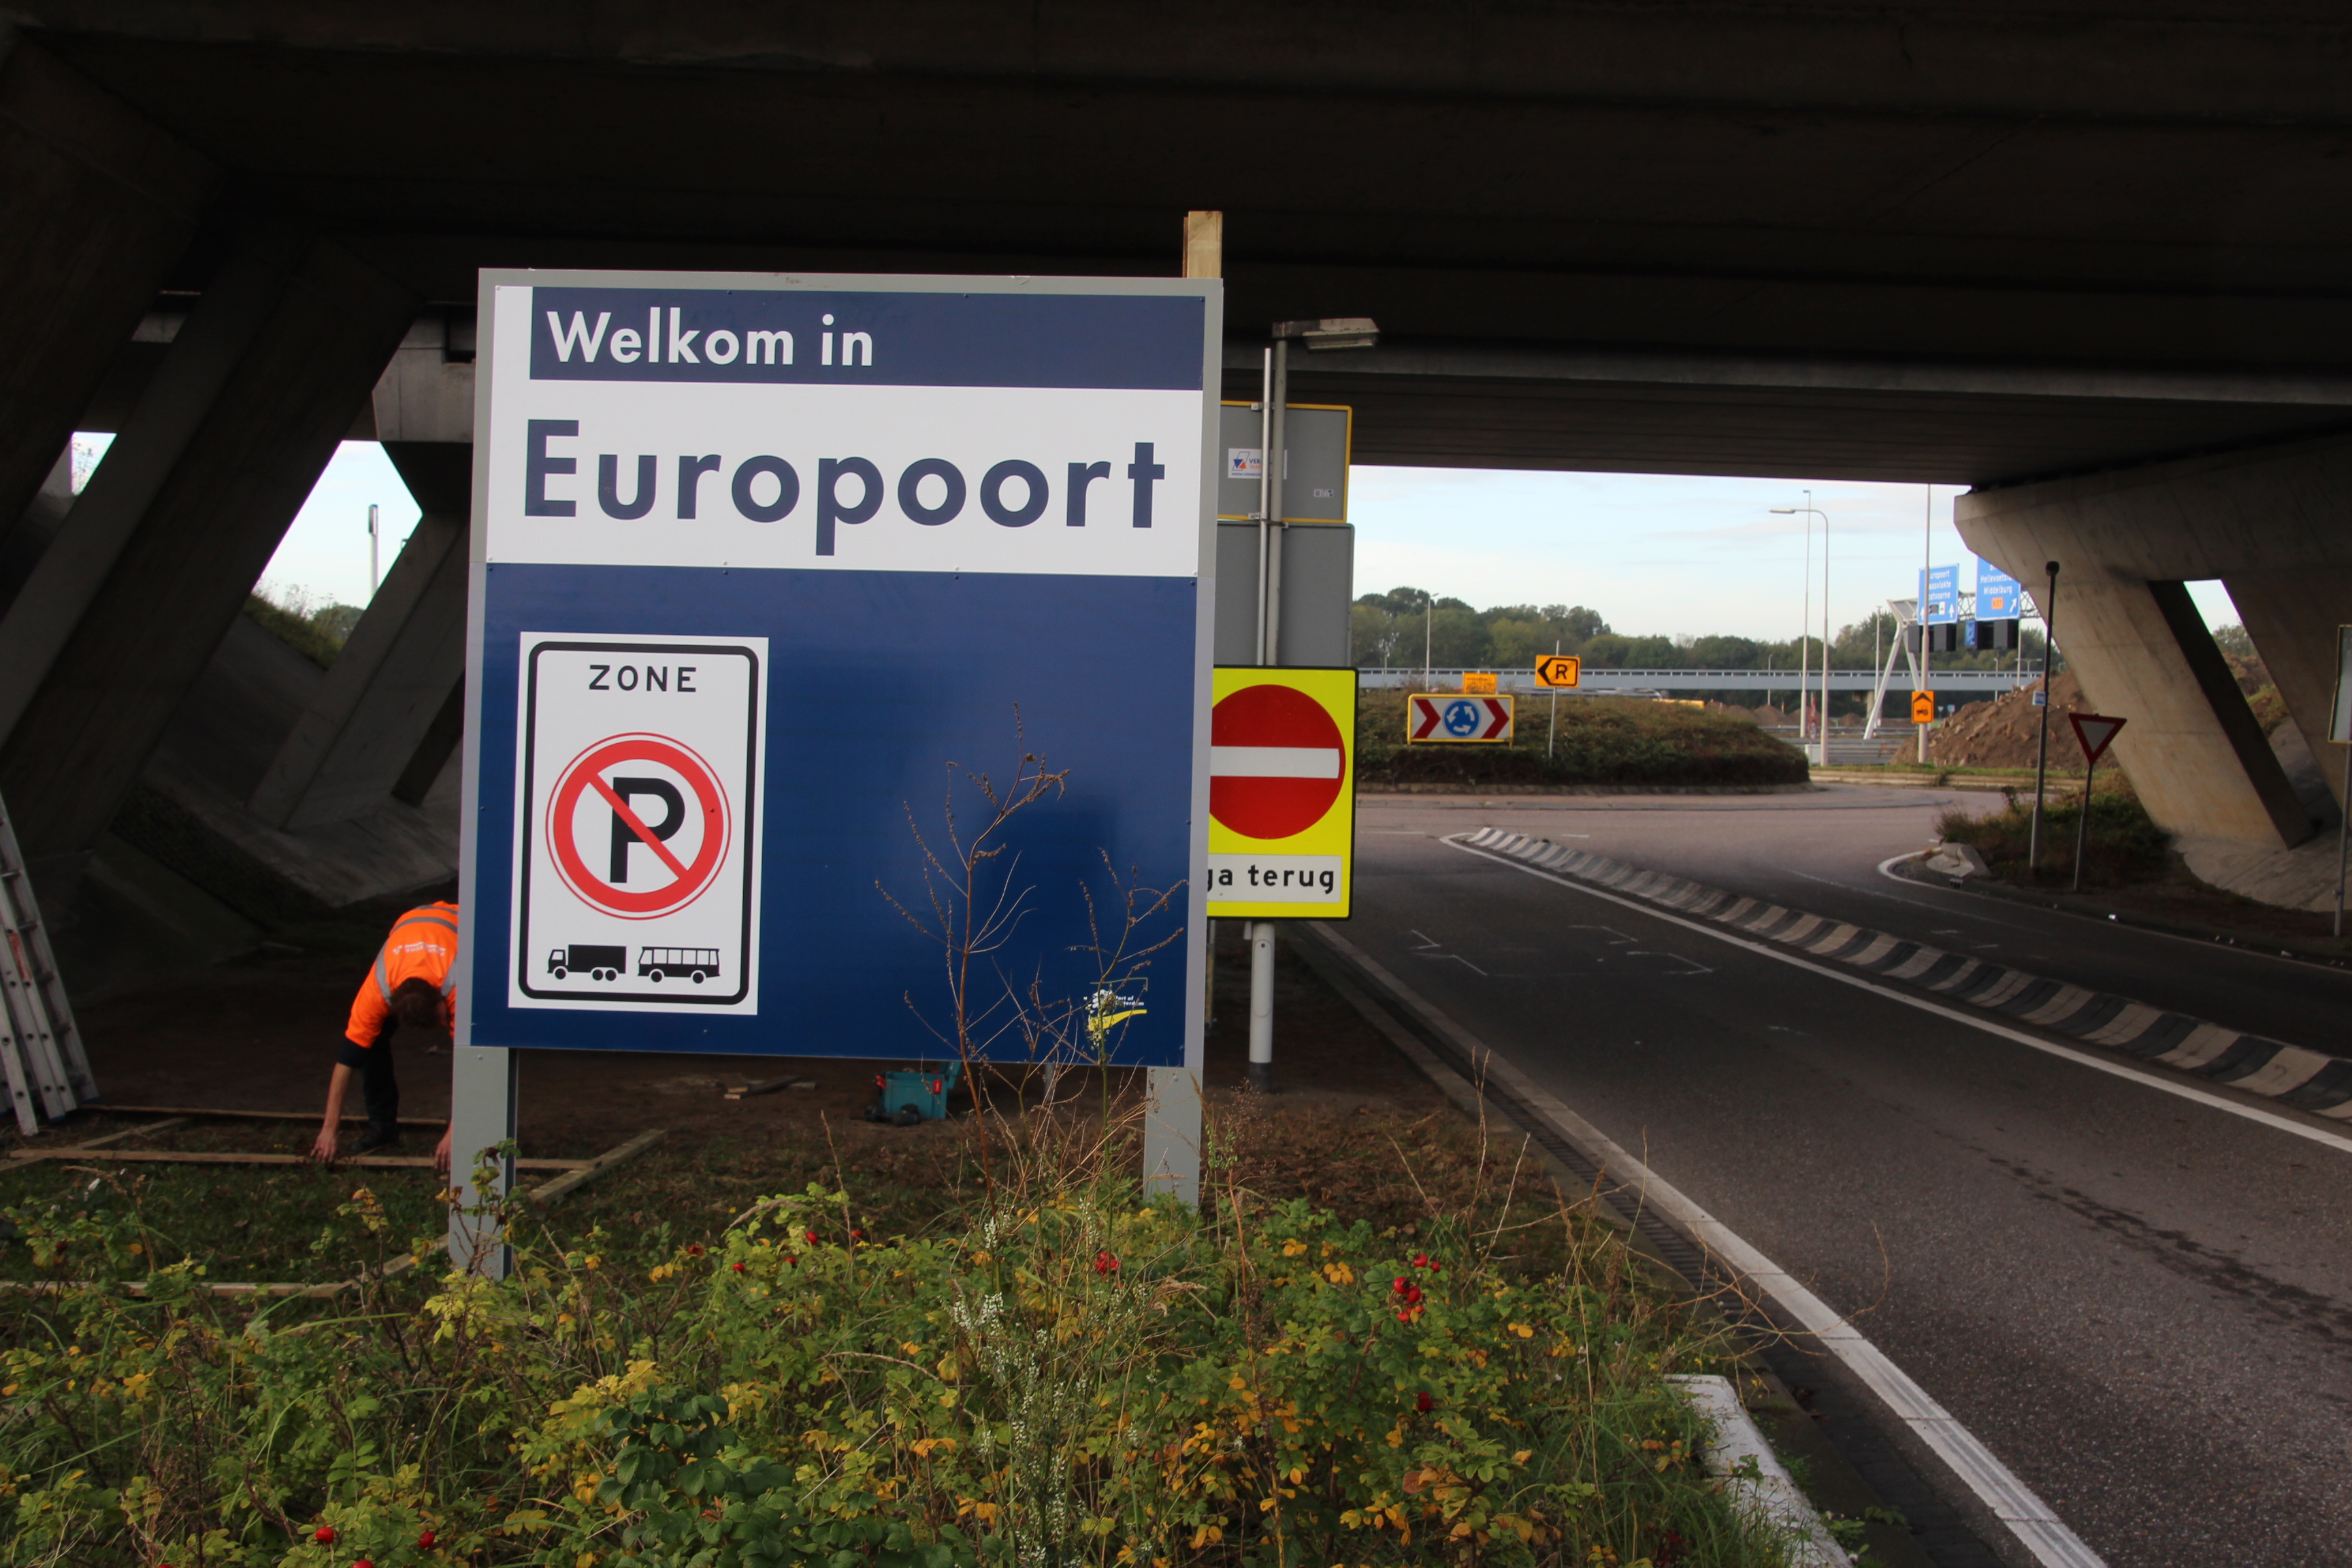 Proefbord Europoort